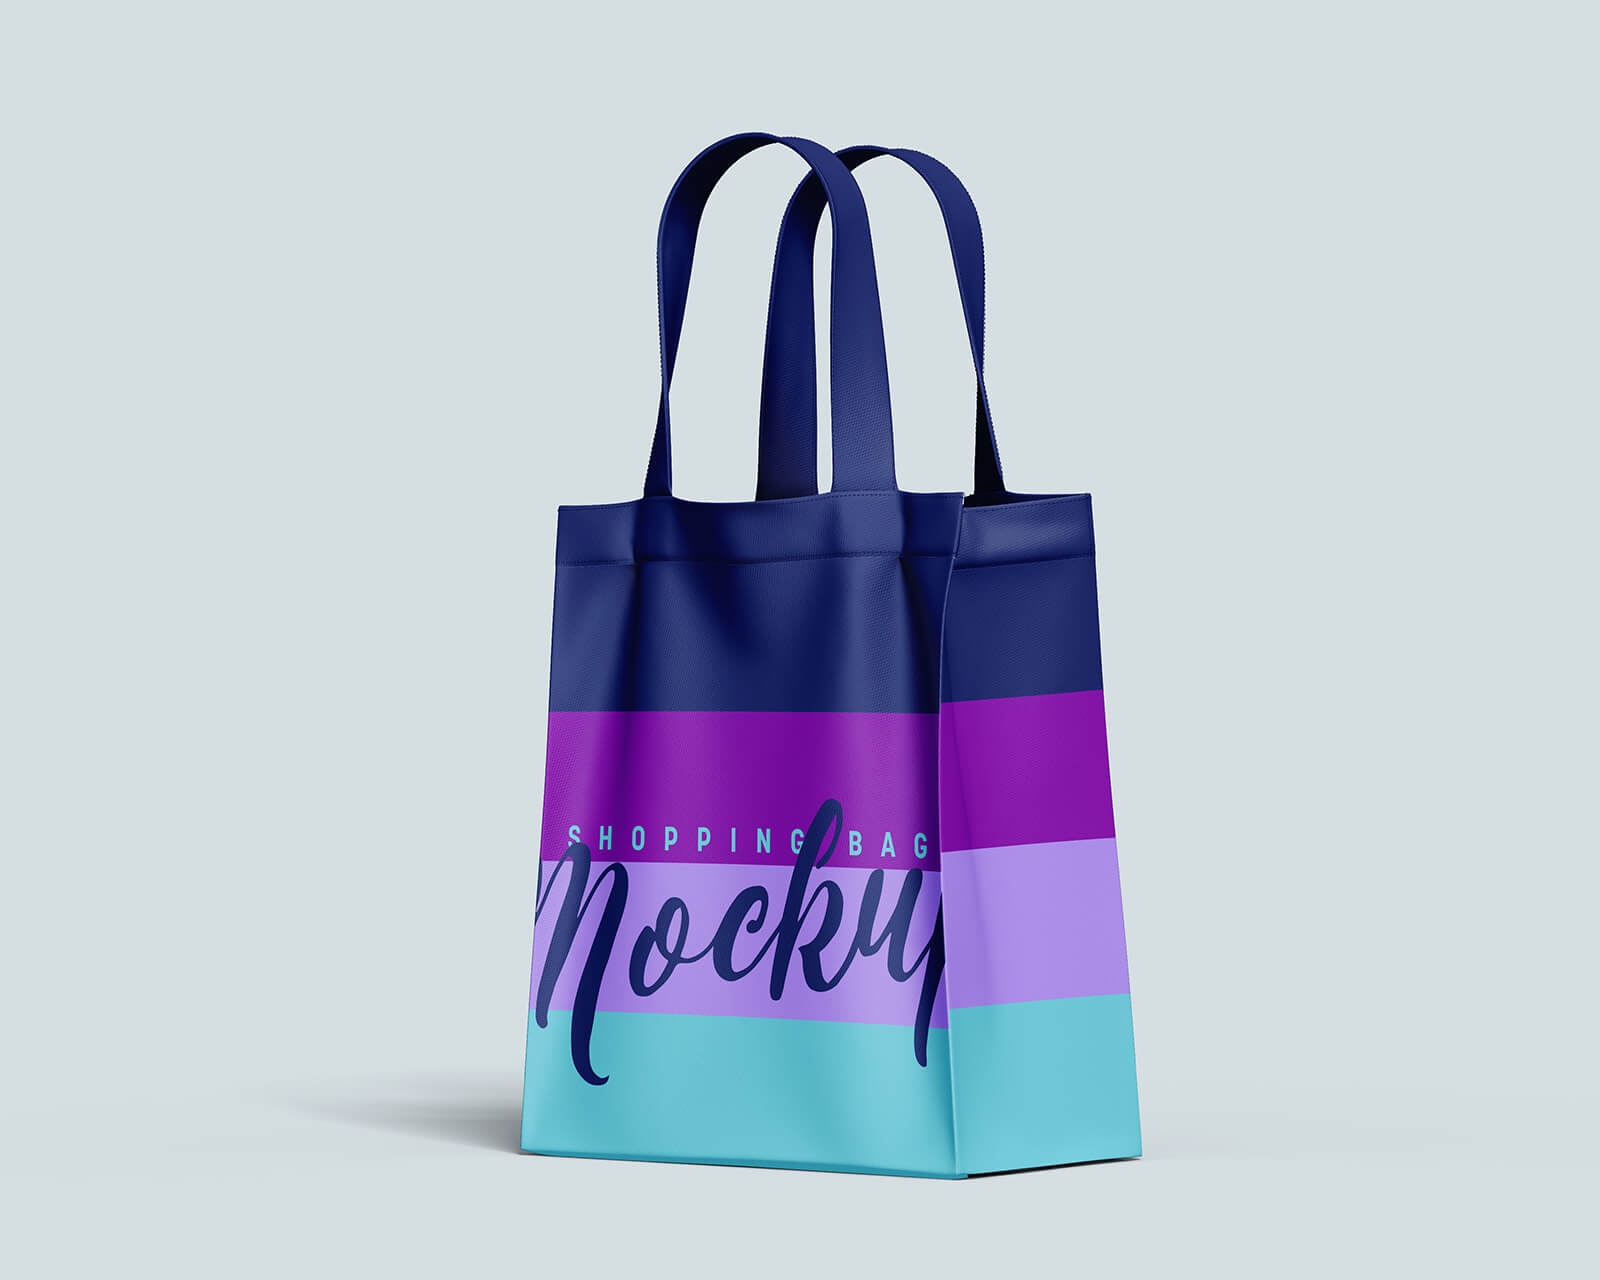 Free Realistic Shopping Bag Mockup PSD Set